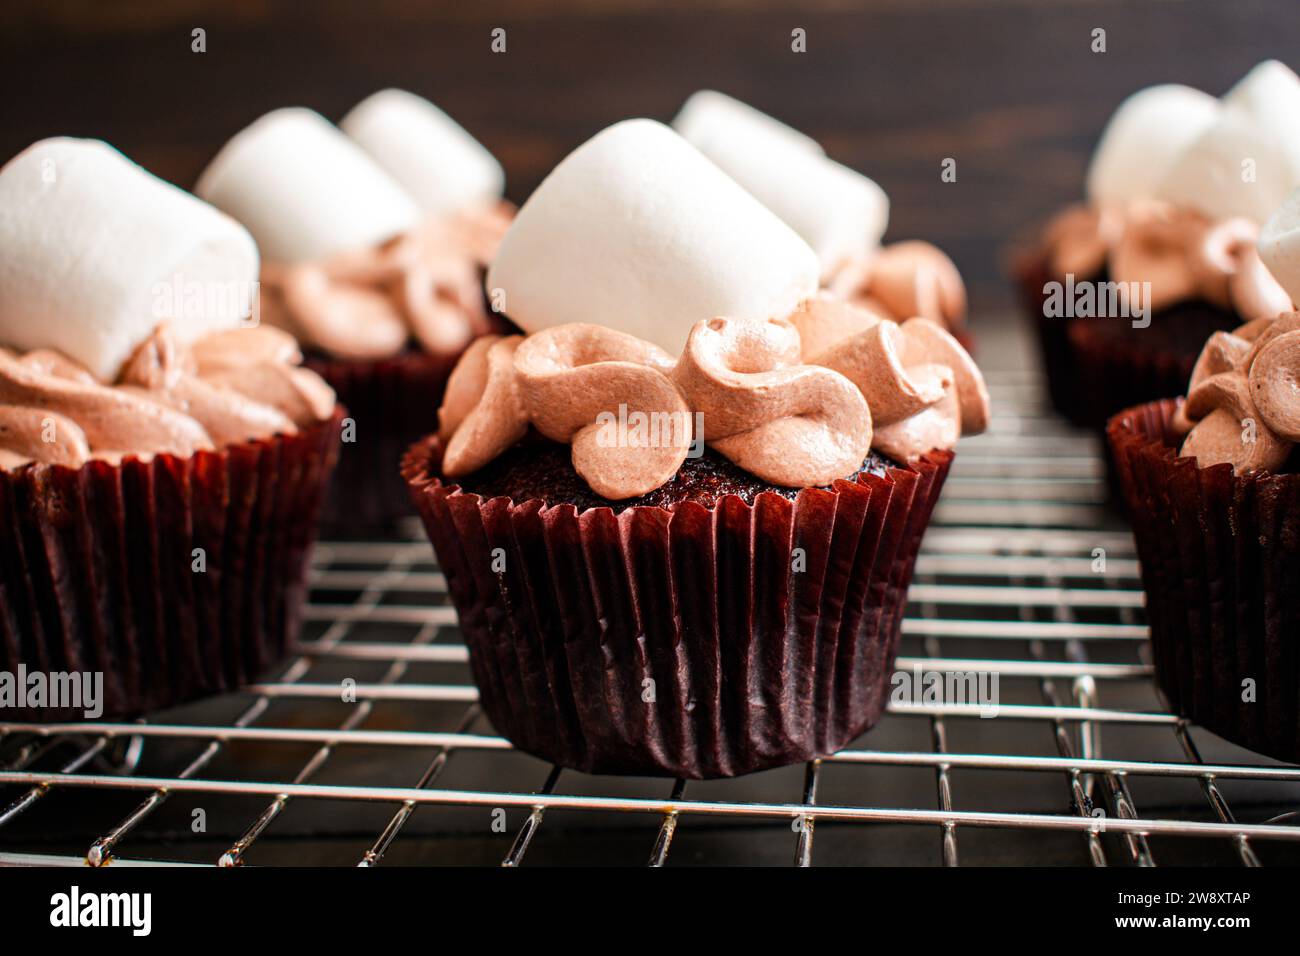 Cupcakes au chocolat chaud garnis de guimauves géantes : cupcakes au chocolat avec glaçage au chocolat chaud et garniture de guimauve Banque D'Images